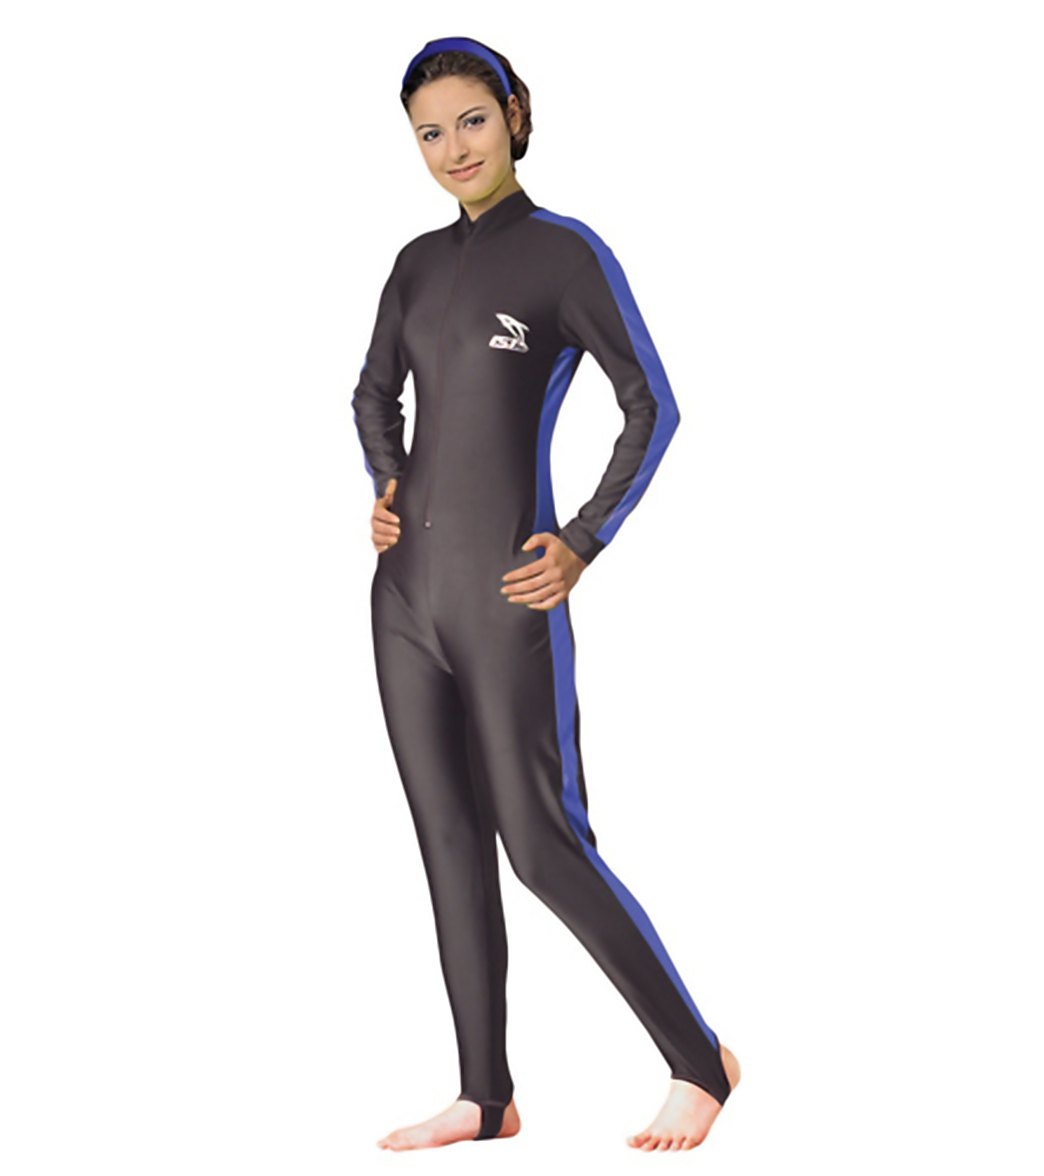 IST Spandex Dive Skin Suit at 